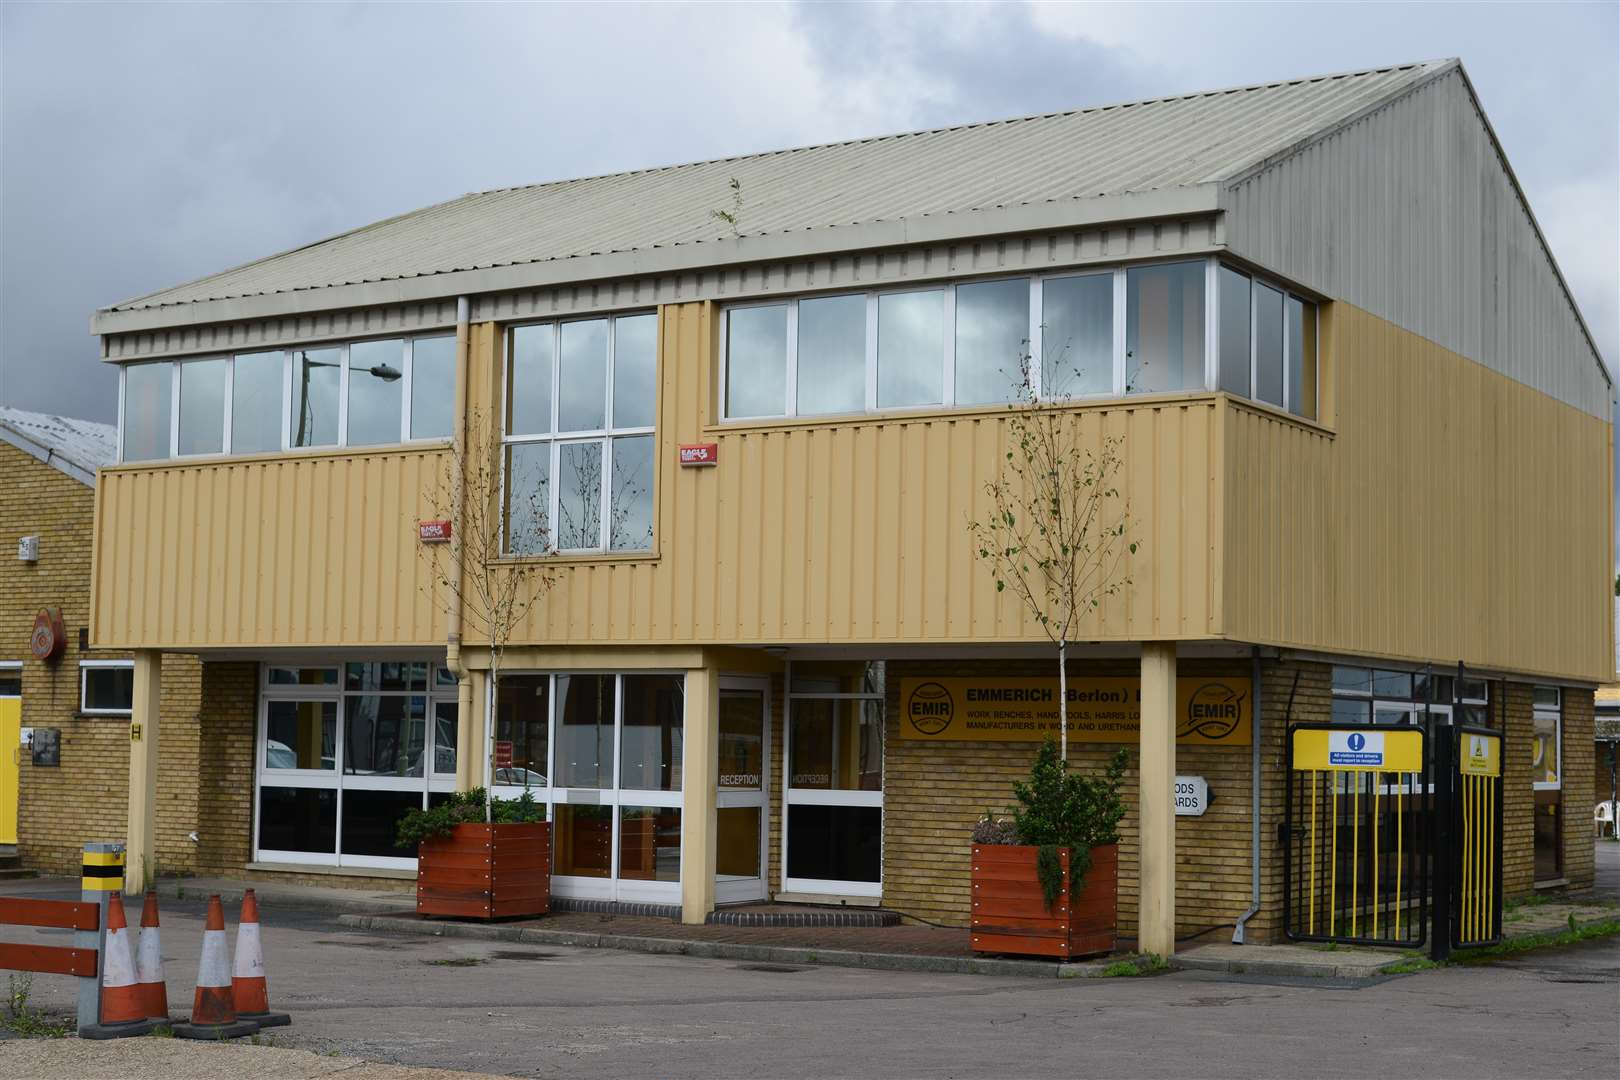 The premises of Emmerich (Berlon) Ltd in Kingsnorth Industrial Estate, Ashford